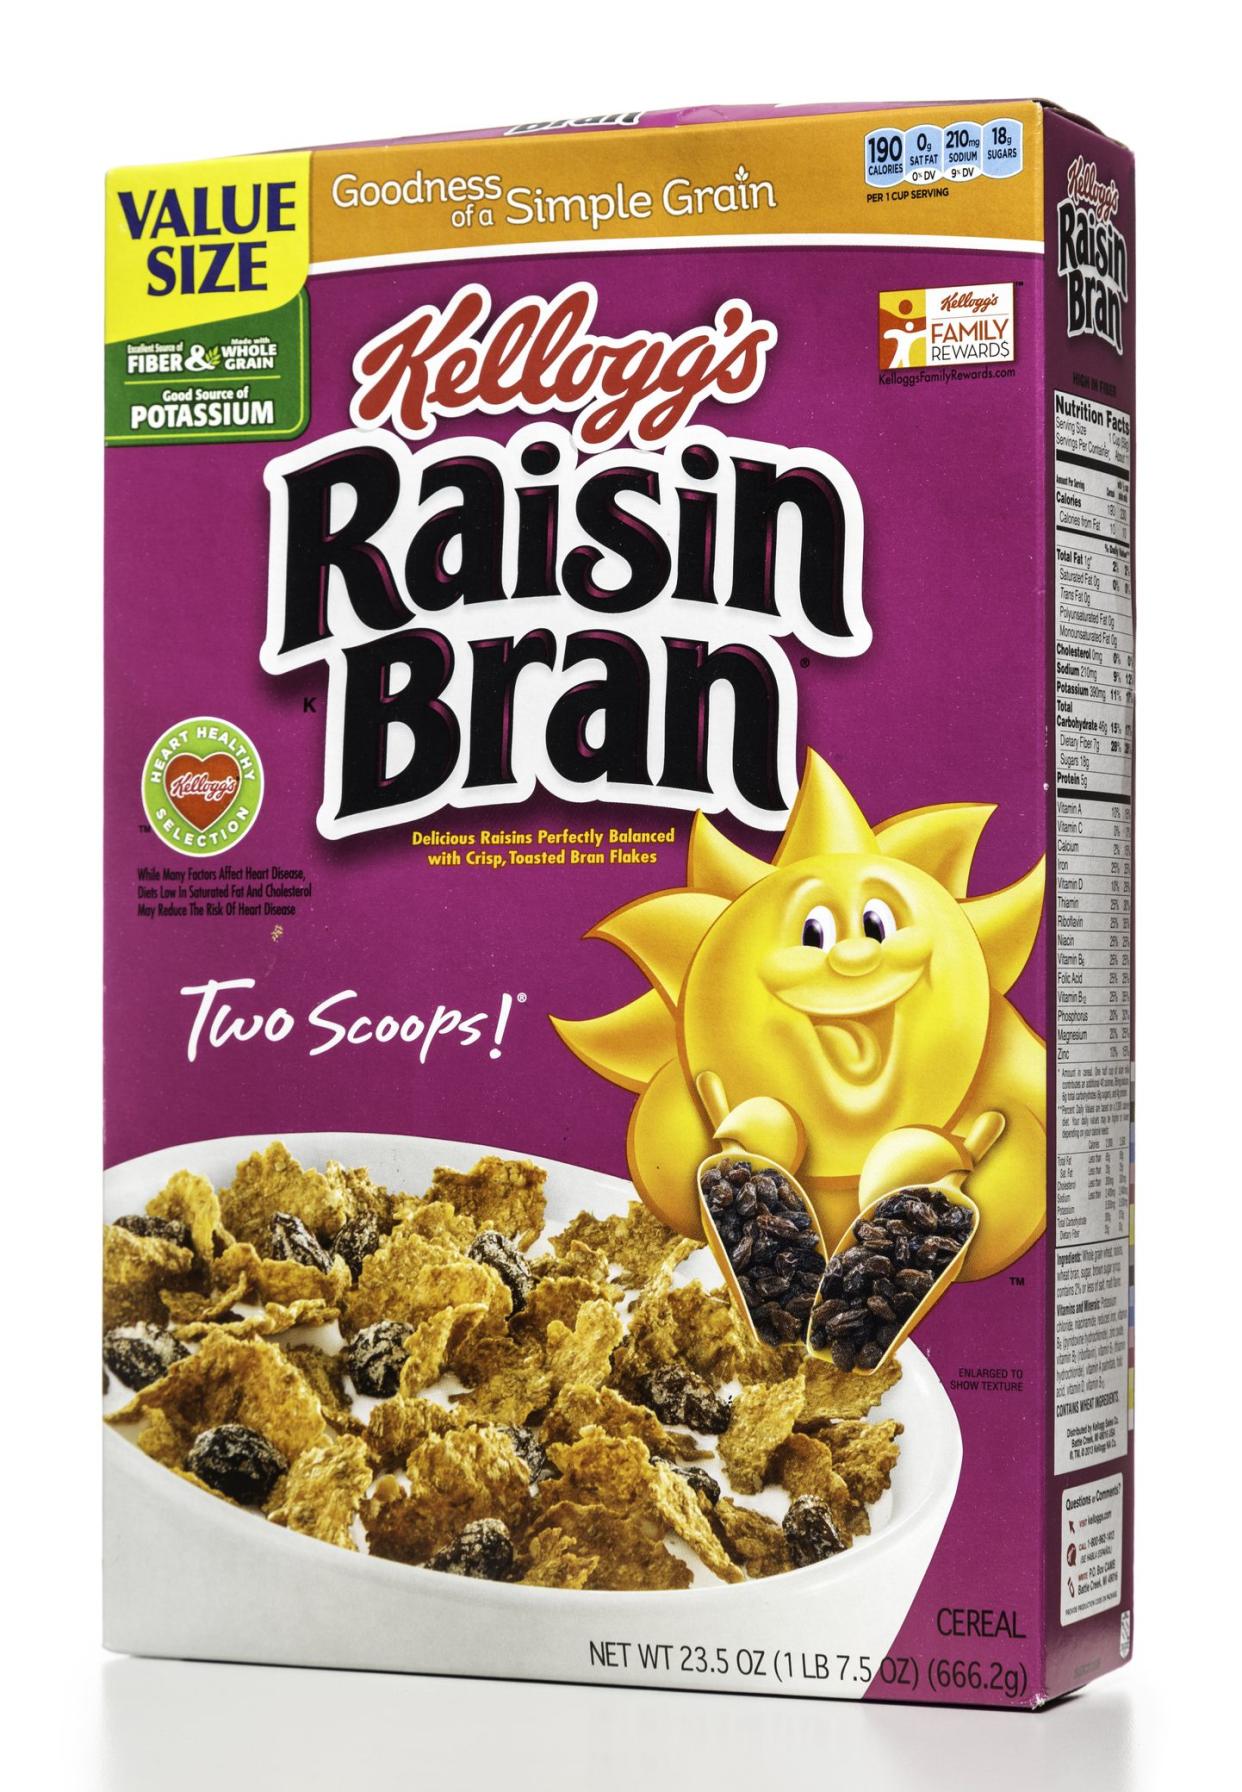 Miami, USA - July 10, 2014: Kellogg's raisin bran cereal box